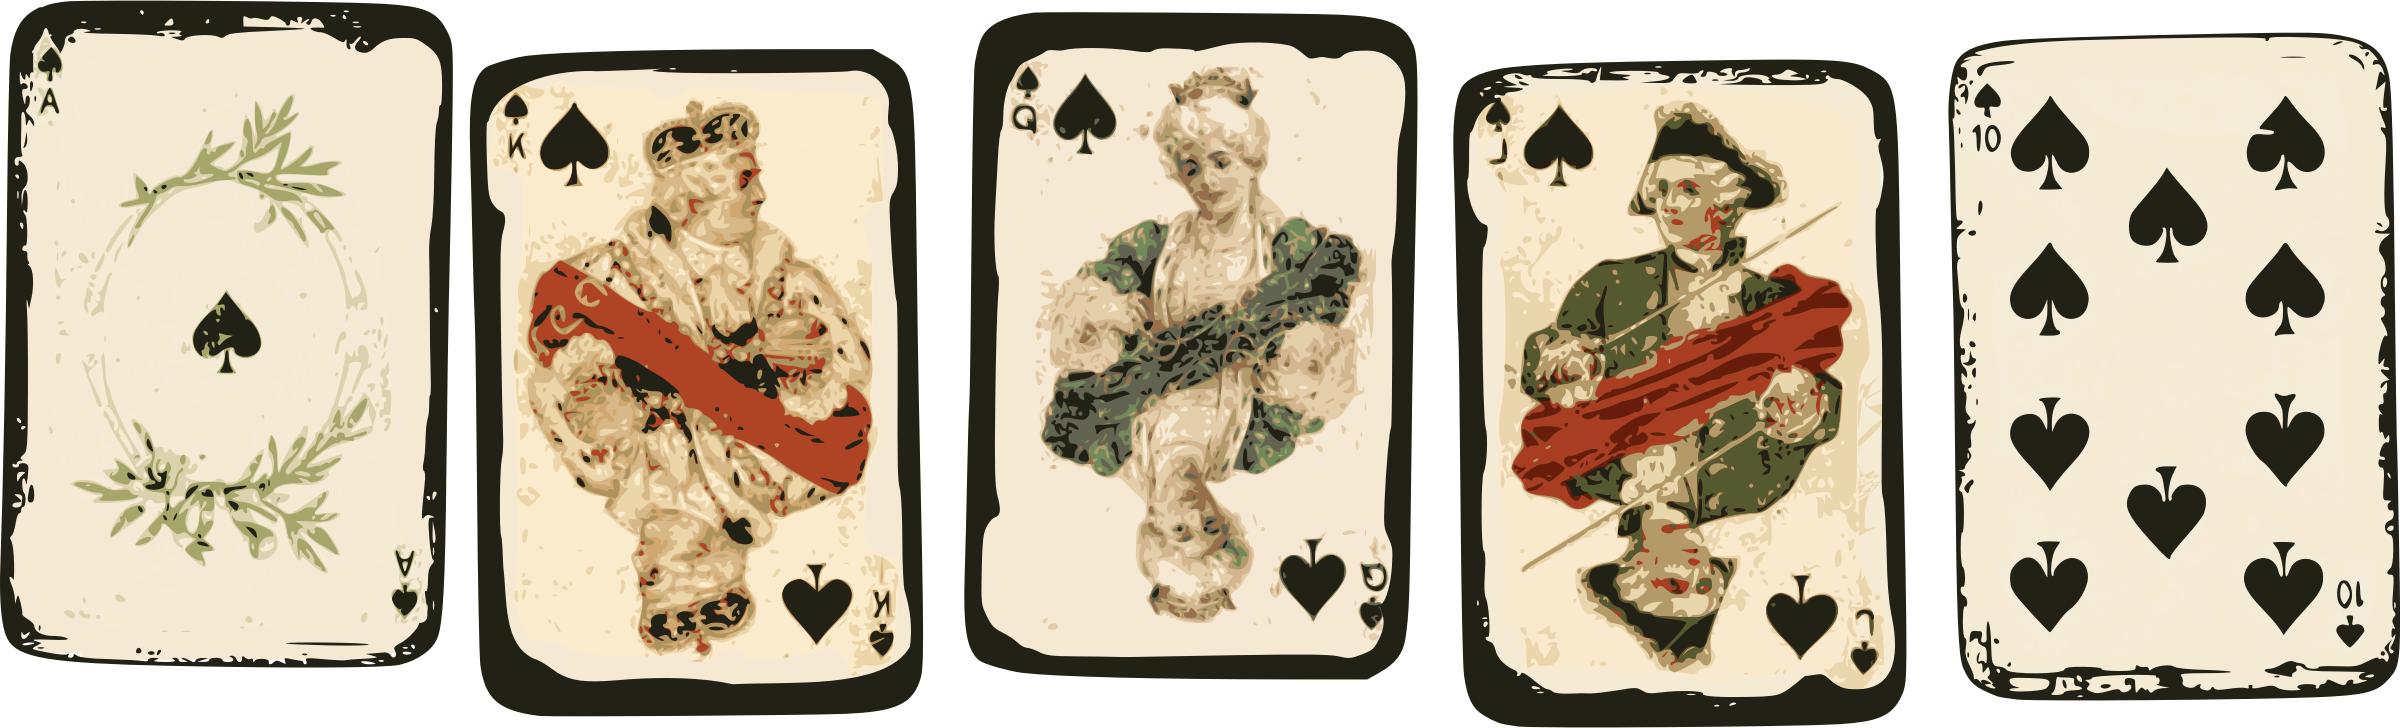 Royal Flush - Poker Cards png